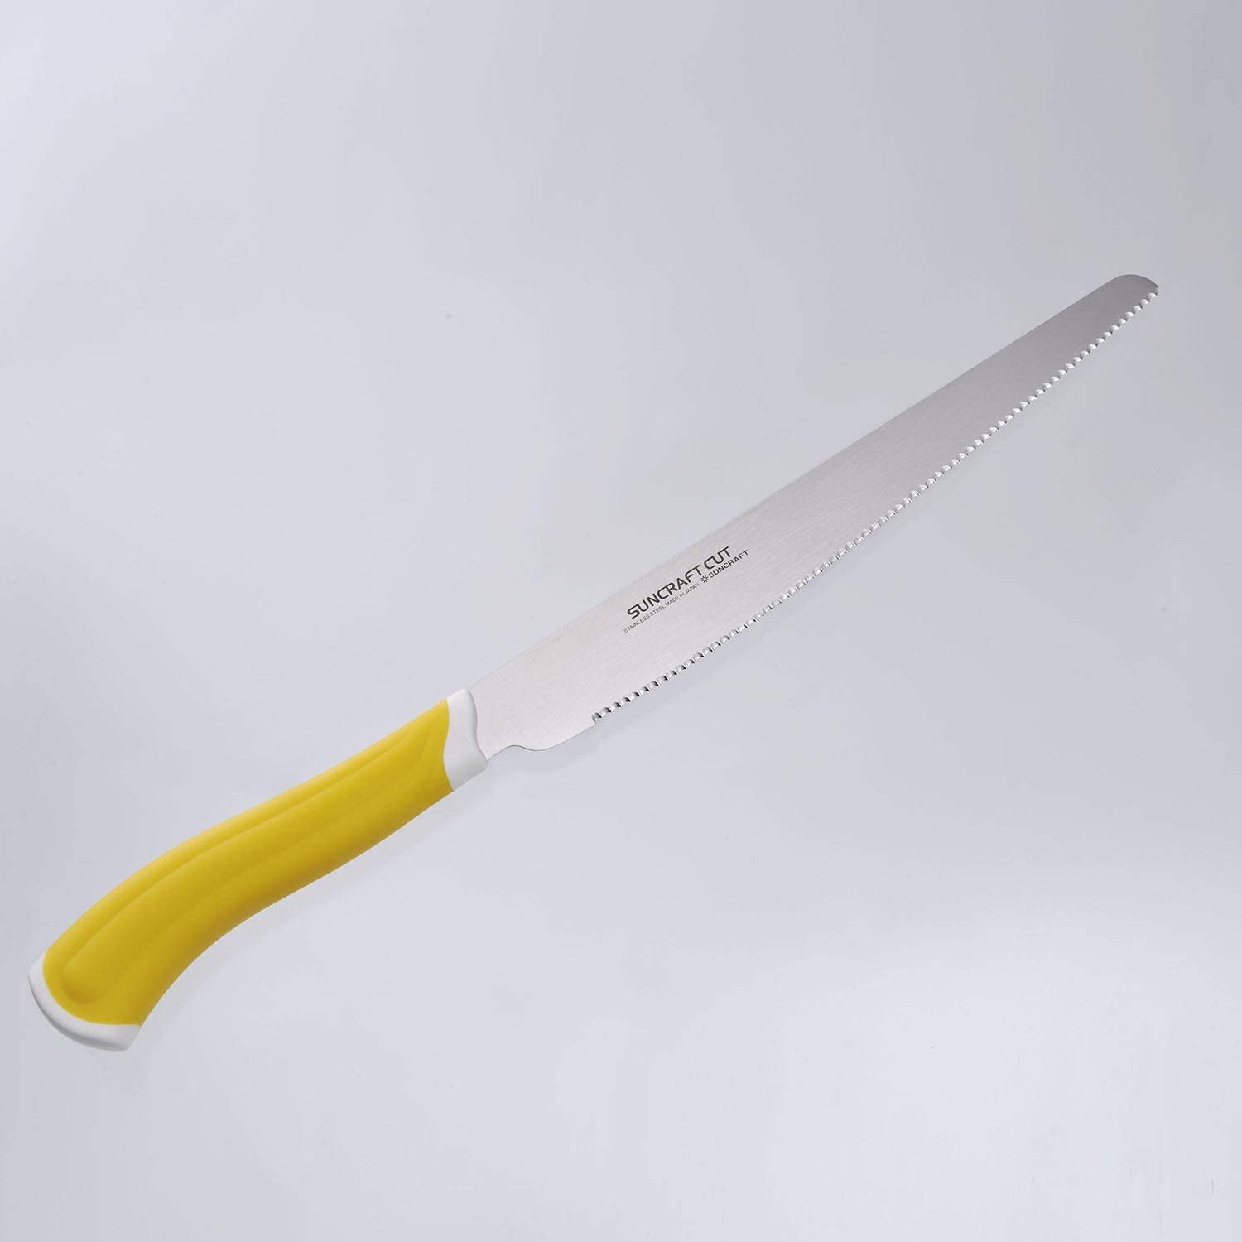 SUNCRAFT(サンクラフト) スムーズパン切りナイフ HE-2101の商品画像サムネ9 